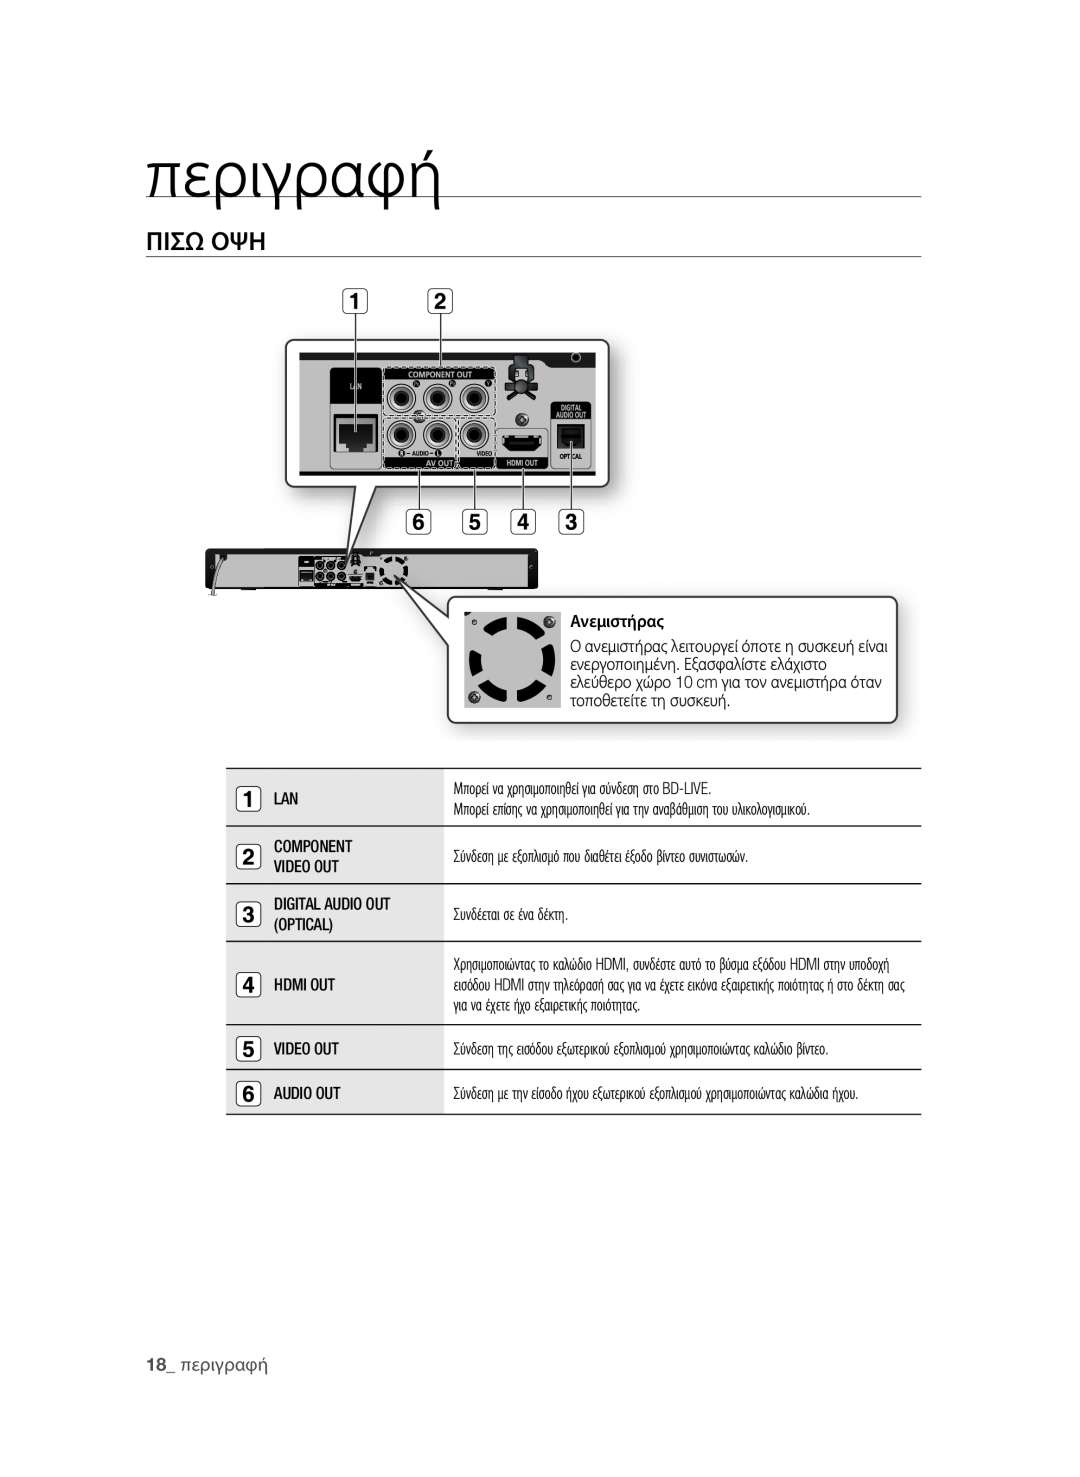 Samsung BD-P1580/EDC manual Πισω οψη, 18 περιγραφή 